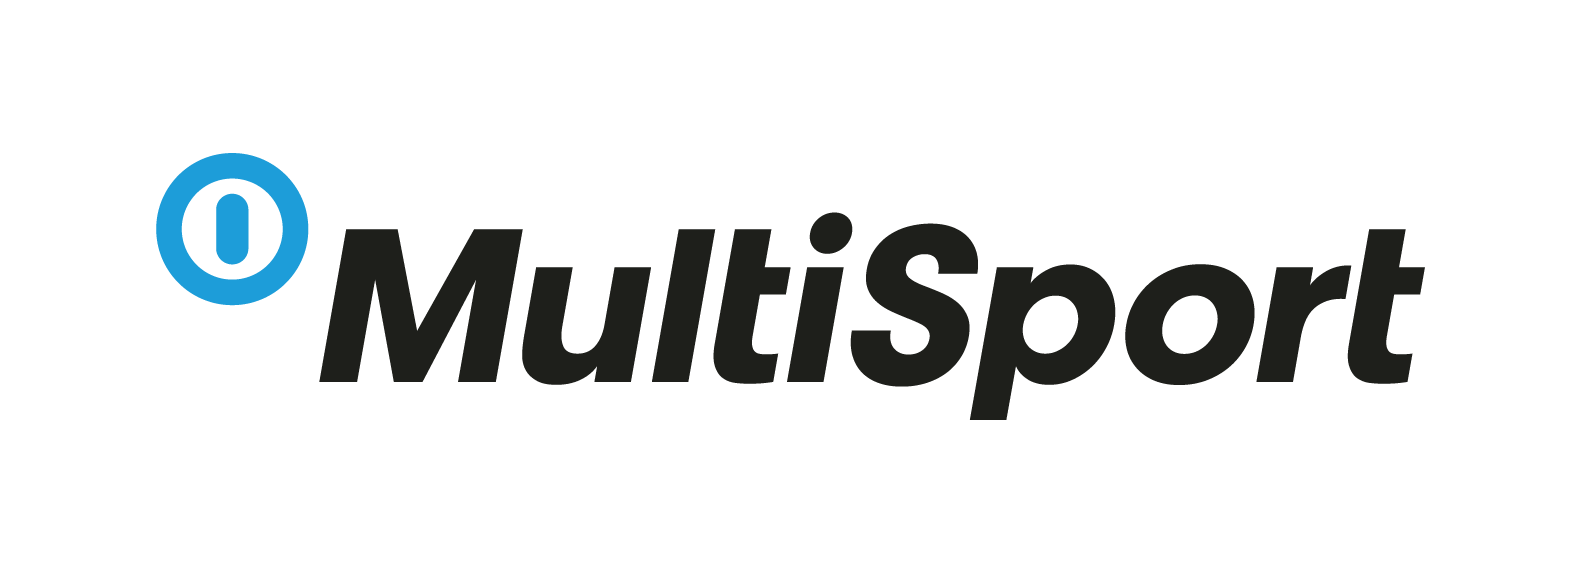 Multisport benefit